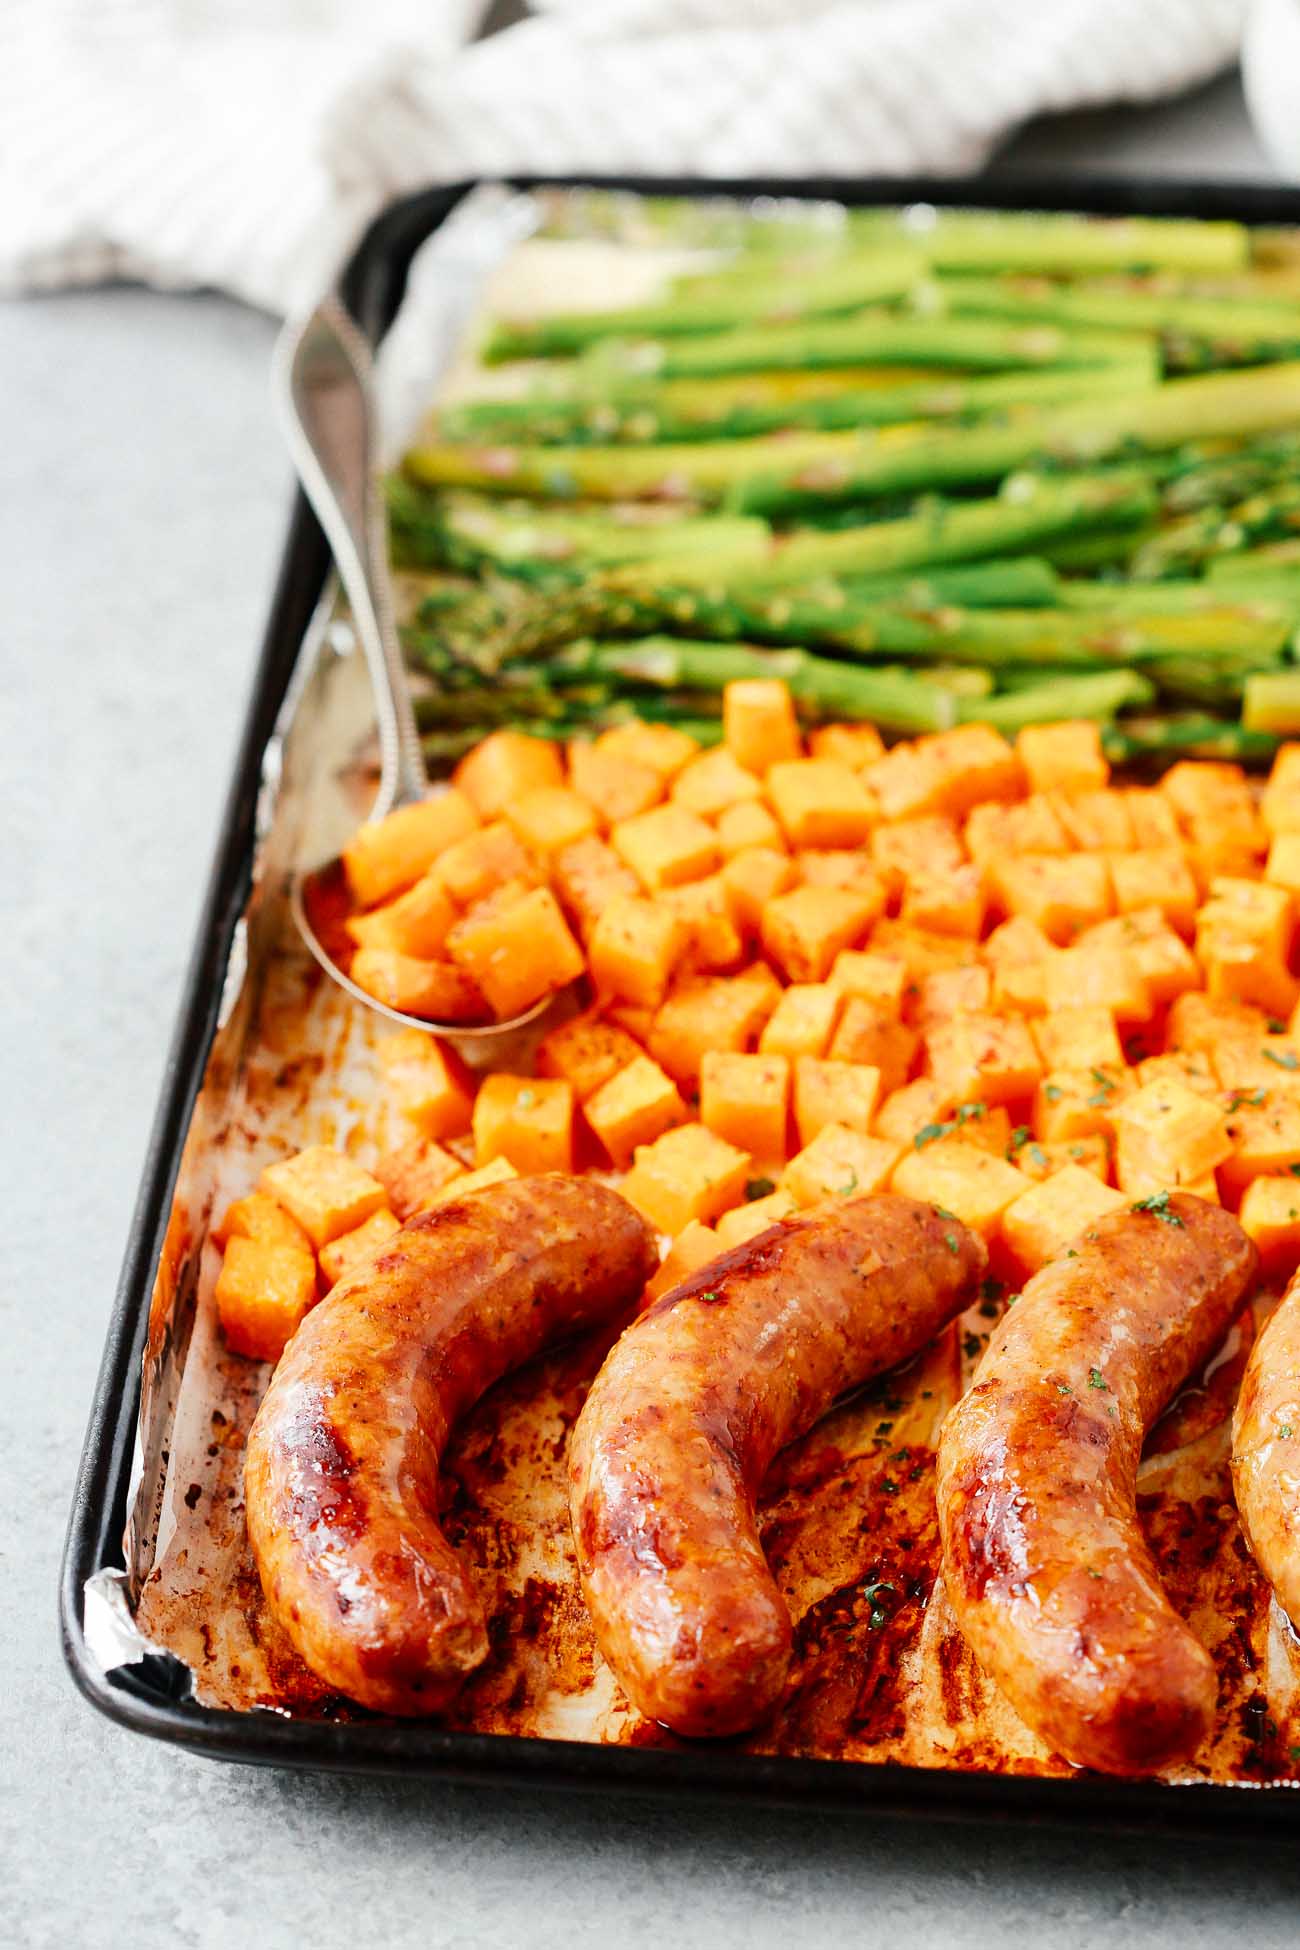 Sheet pan with sausage, sweet potatoes, and asparagus.